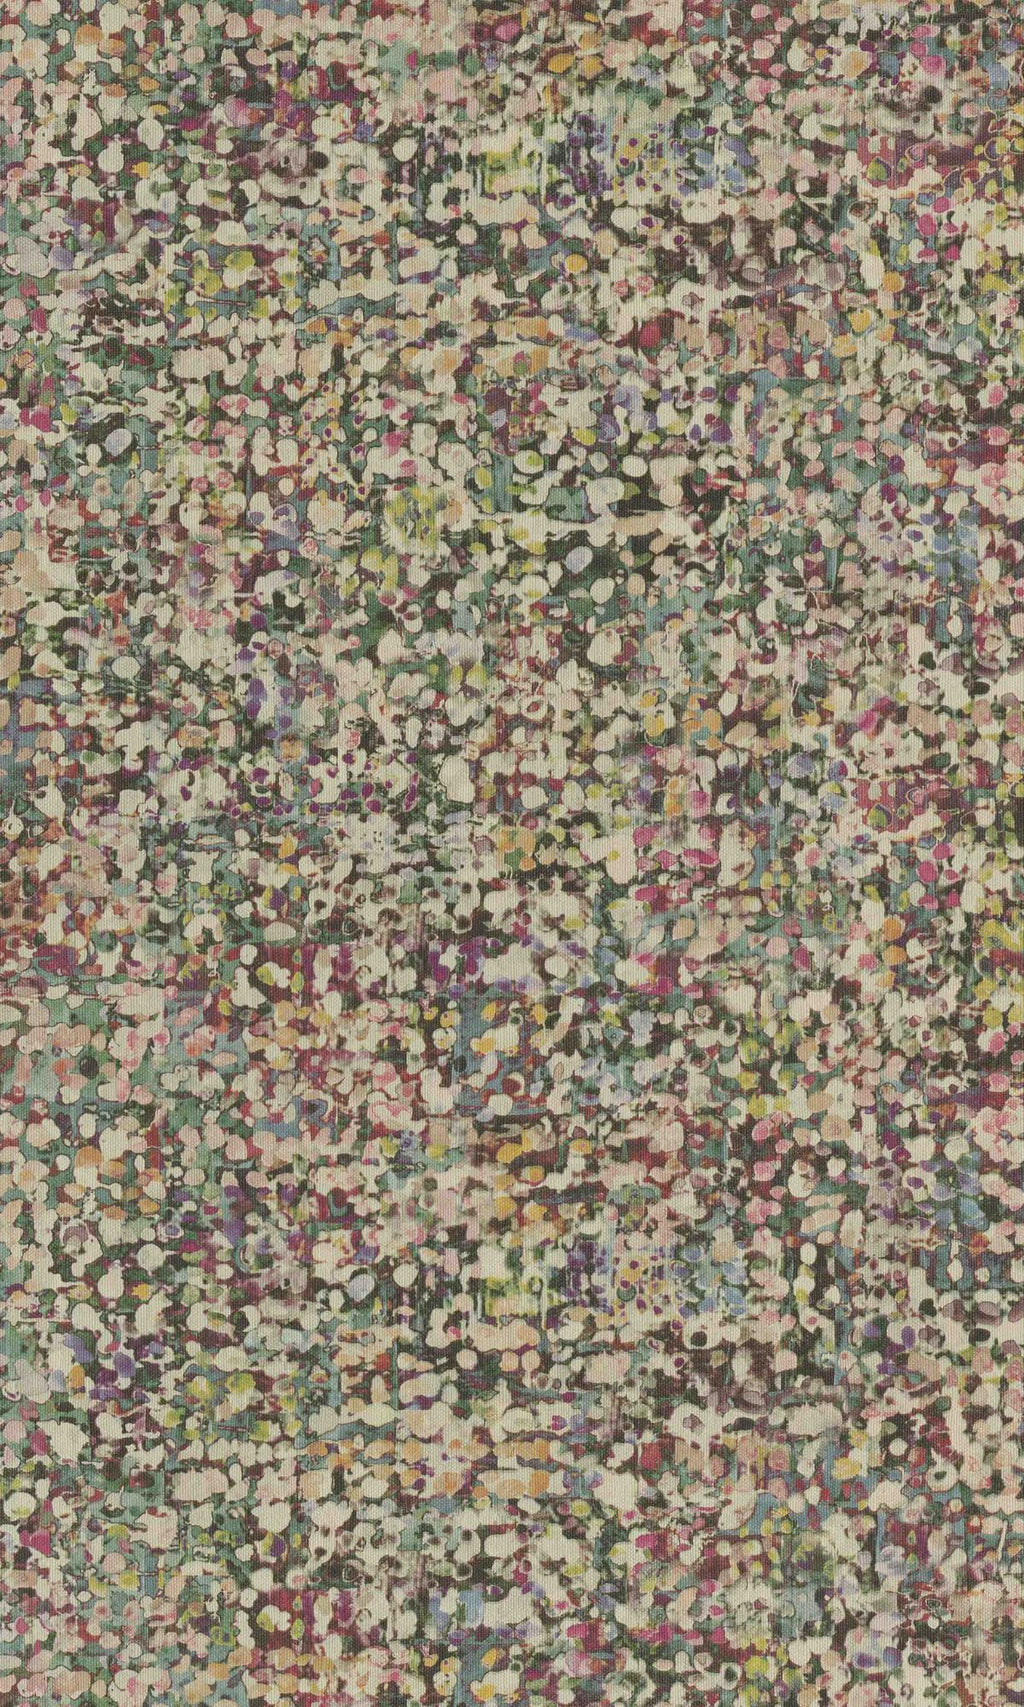 MultiColor Abstract Floral Design Wallpaper R8574